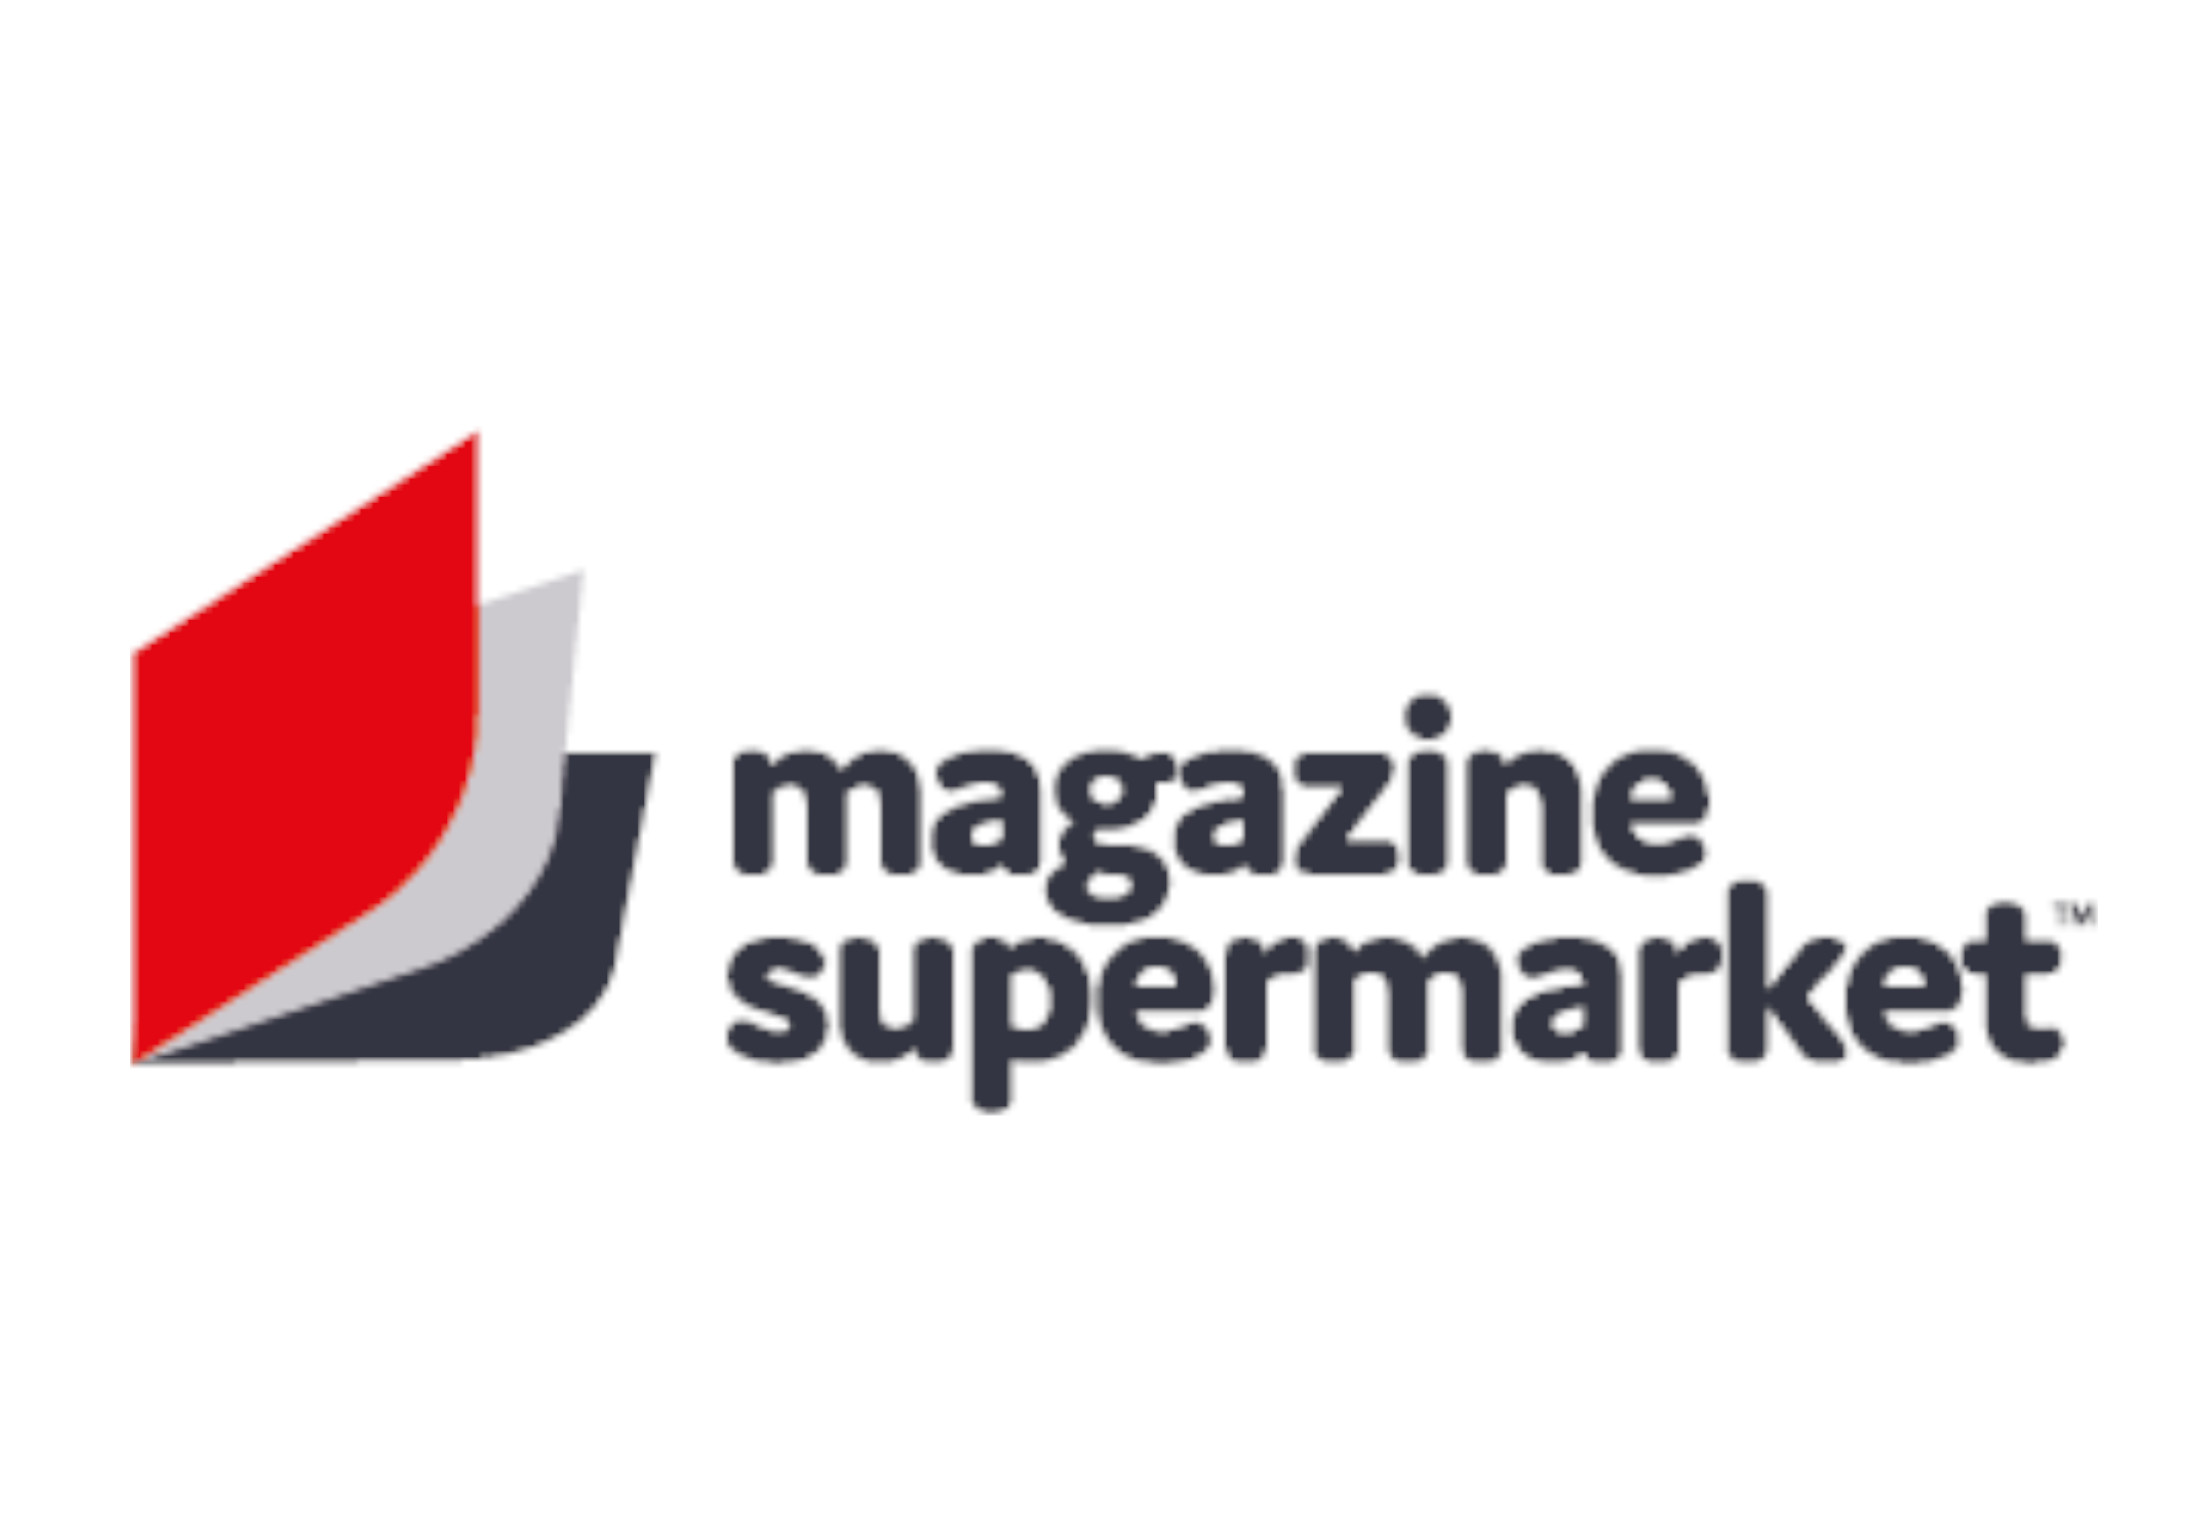 New retail platform launched, Magazine Supermarket